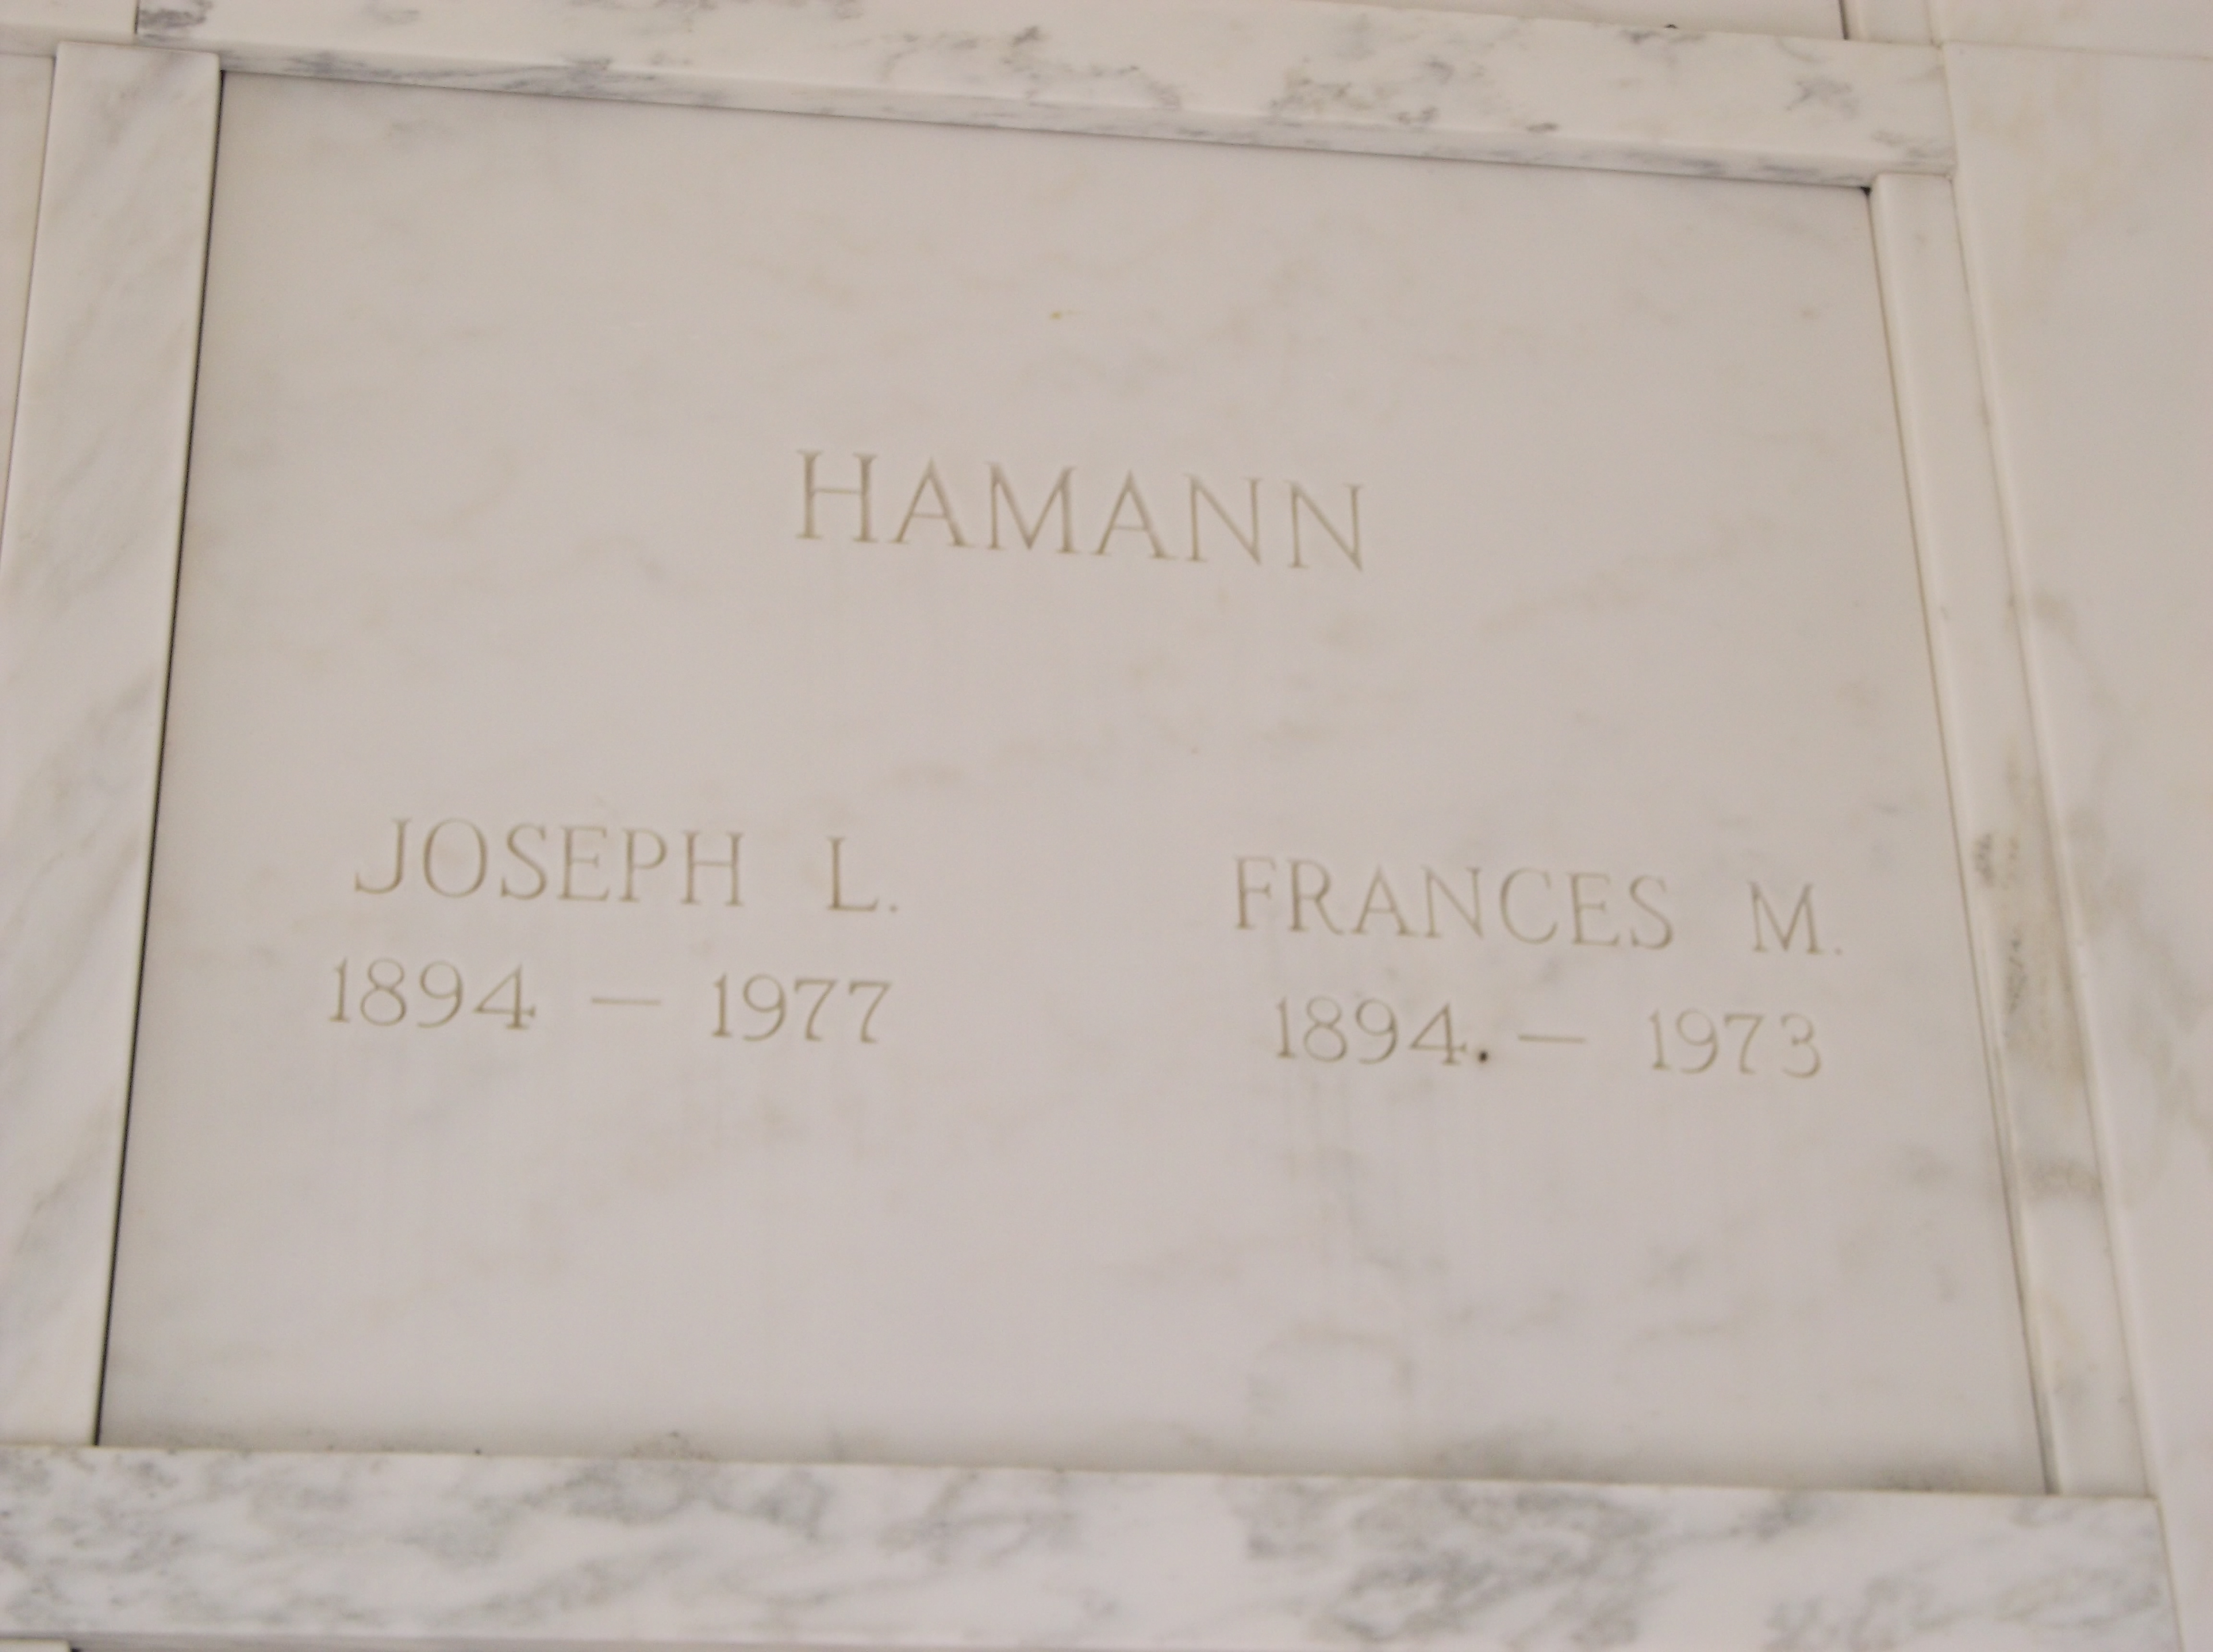 Joseph L Hamann